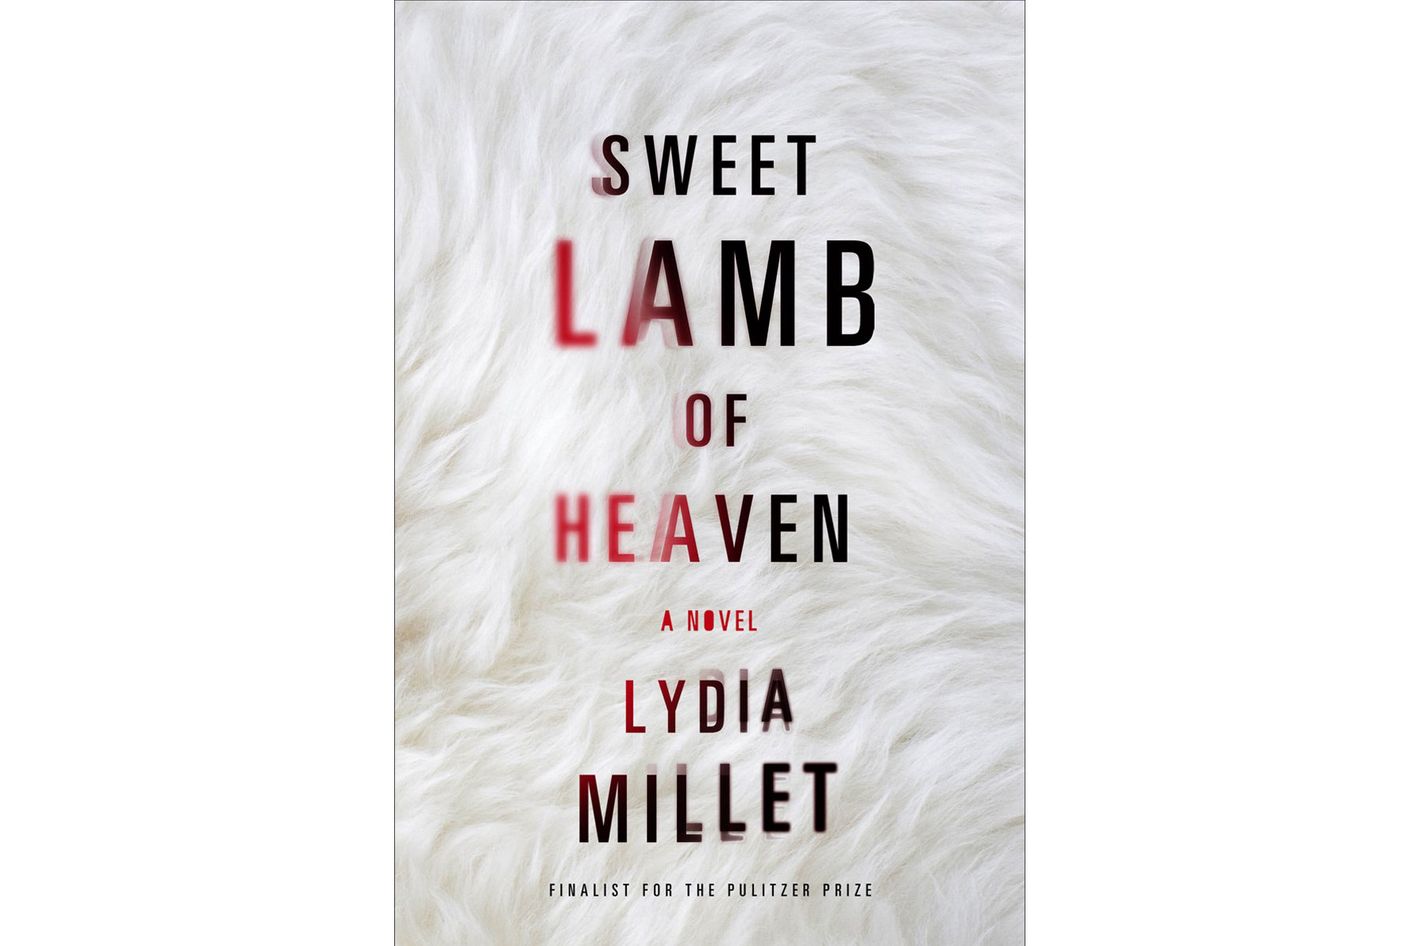 Sweet Lamb of Heaven by Lydia Millet